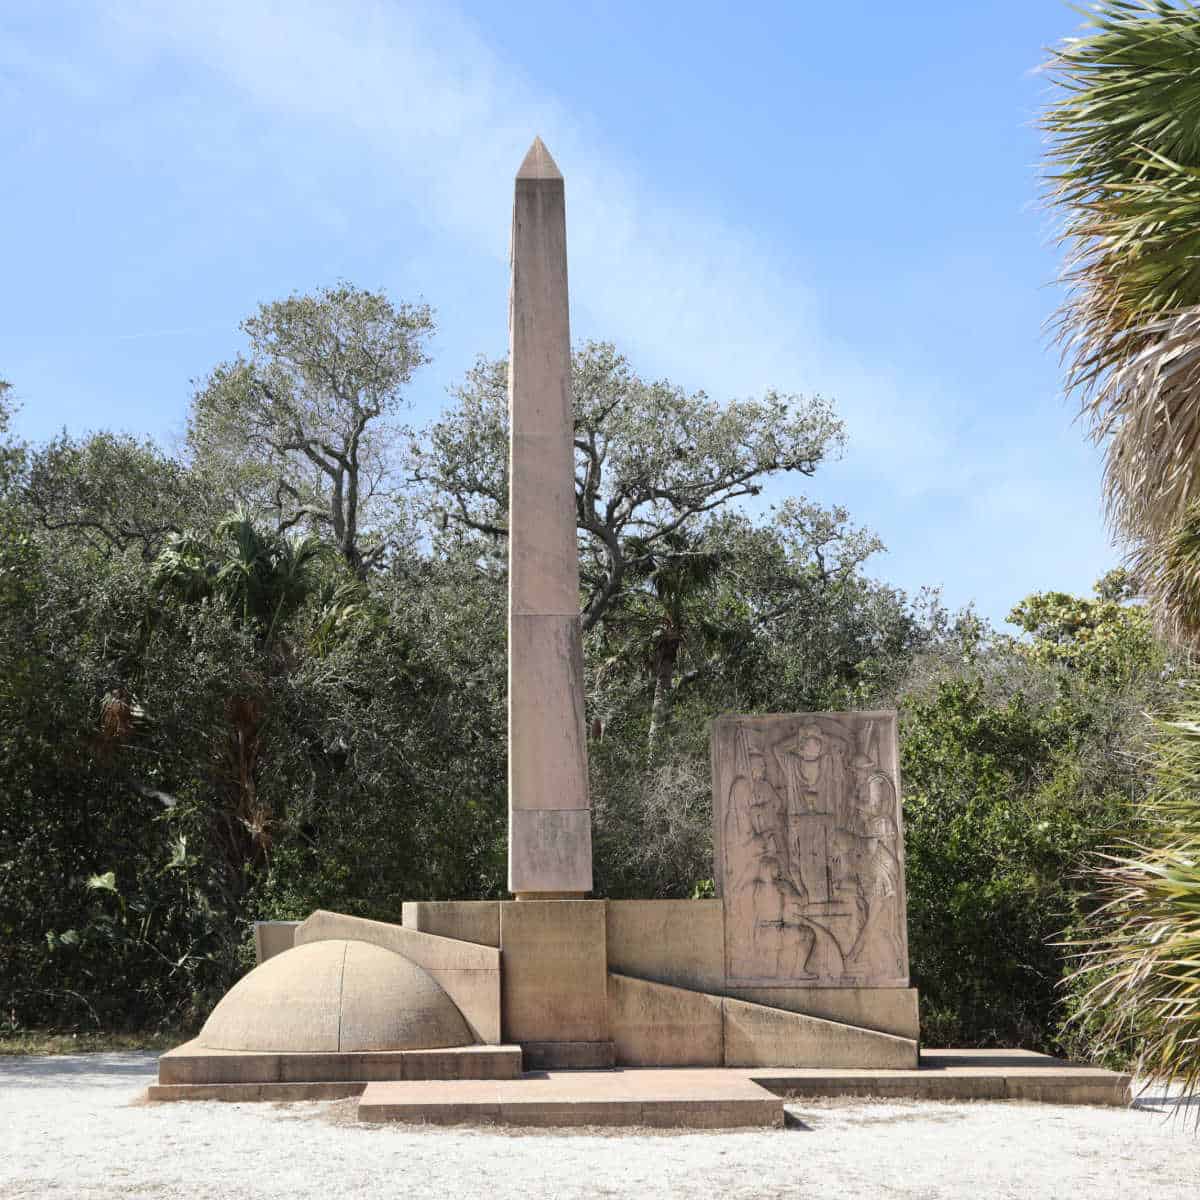 Concrete memorial with obelisk at De Soto National Memorial